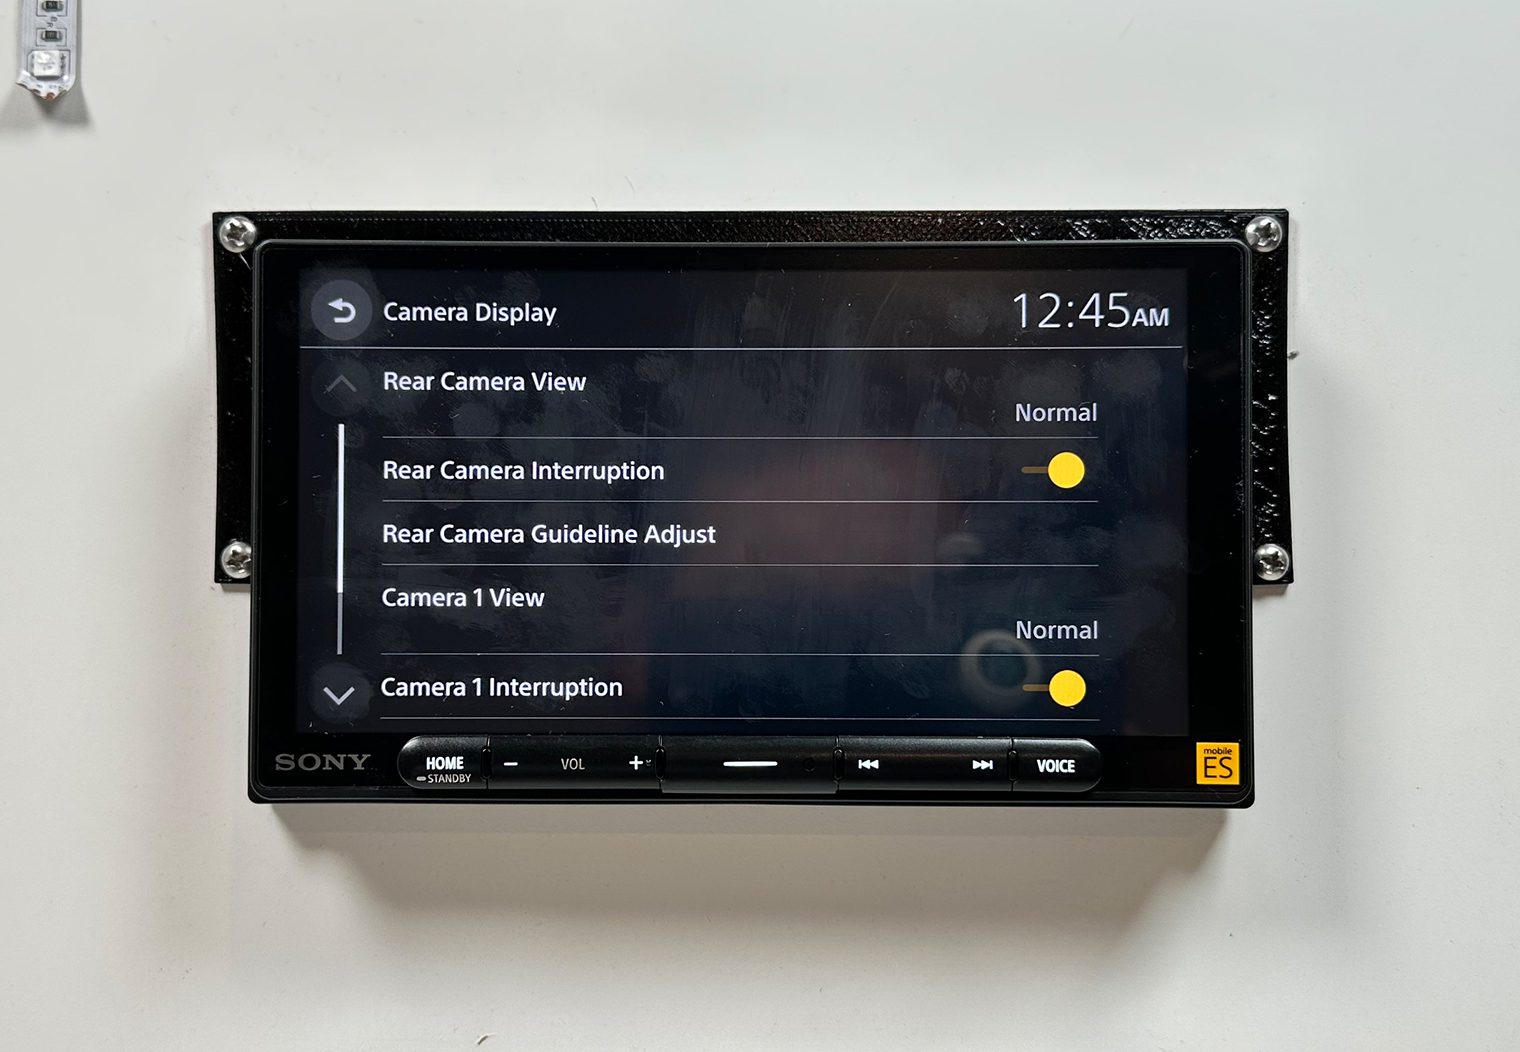 Sony XAV-9000ES camera settings screen